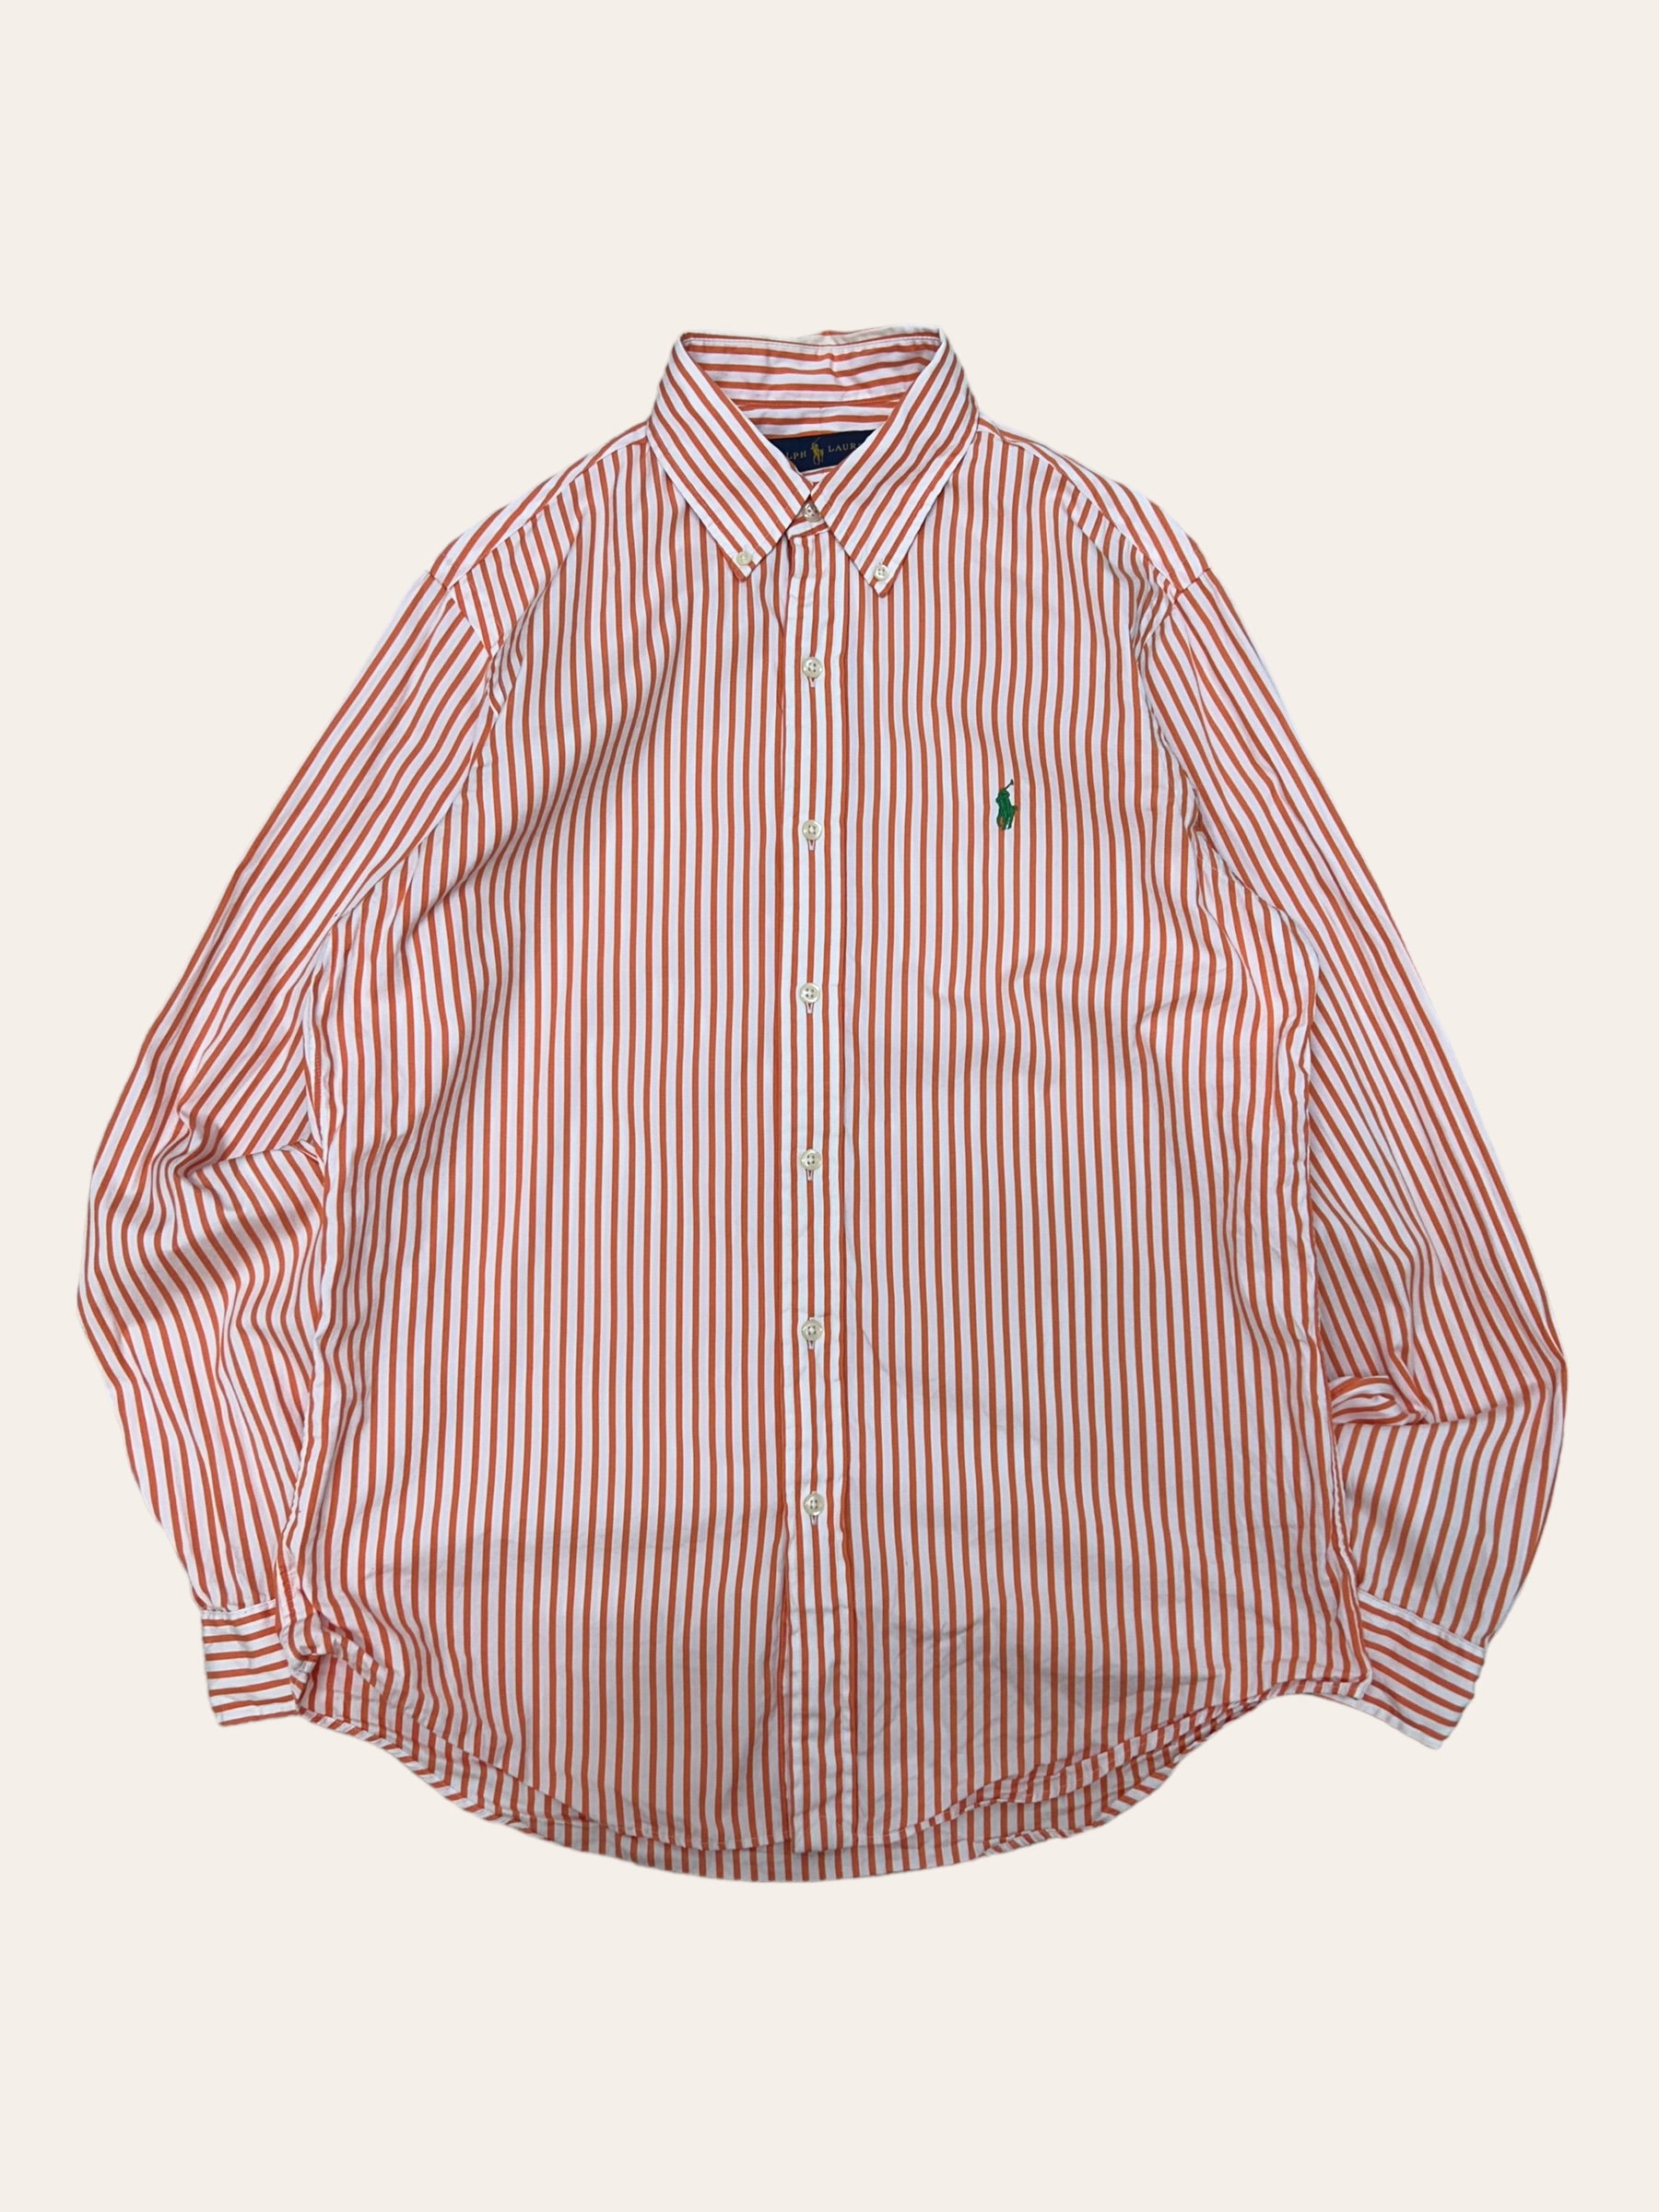 (From USA)Polo ralph lauren orange stripe shirt M